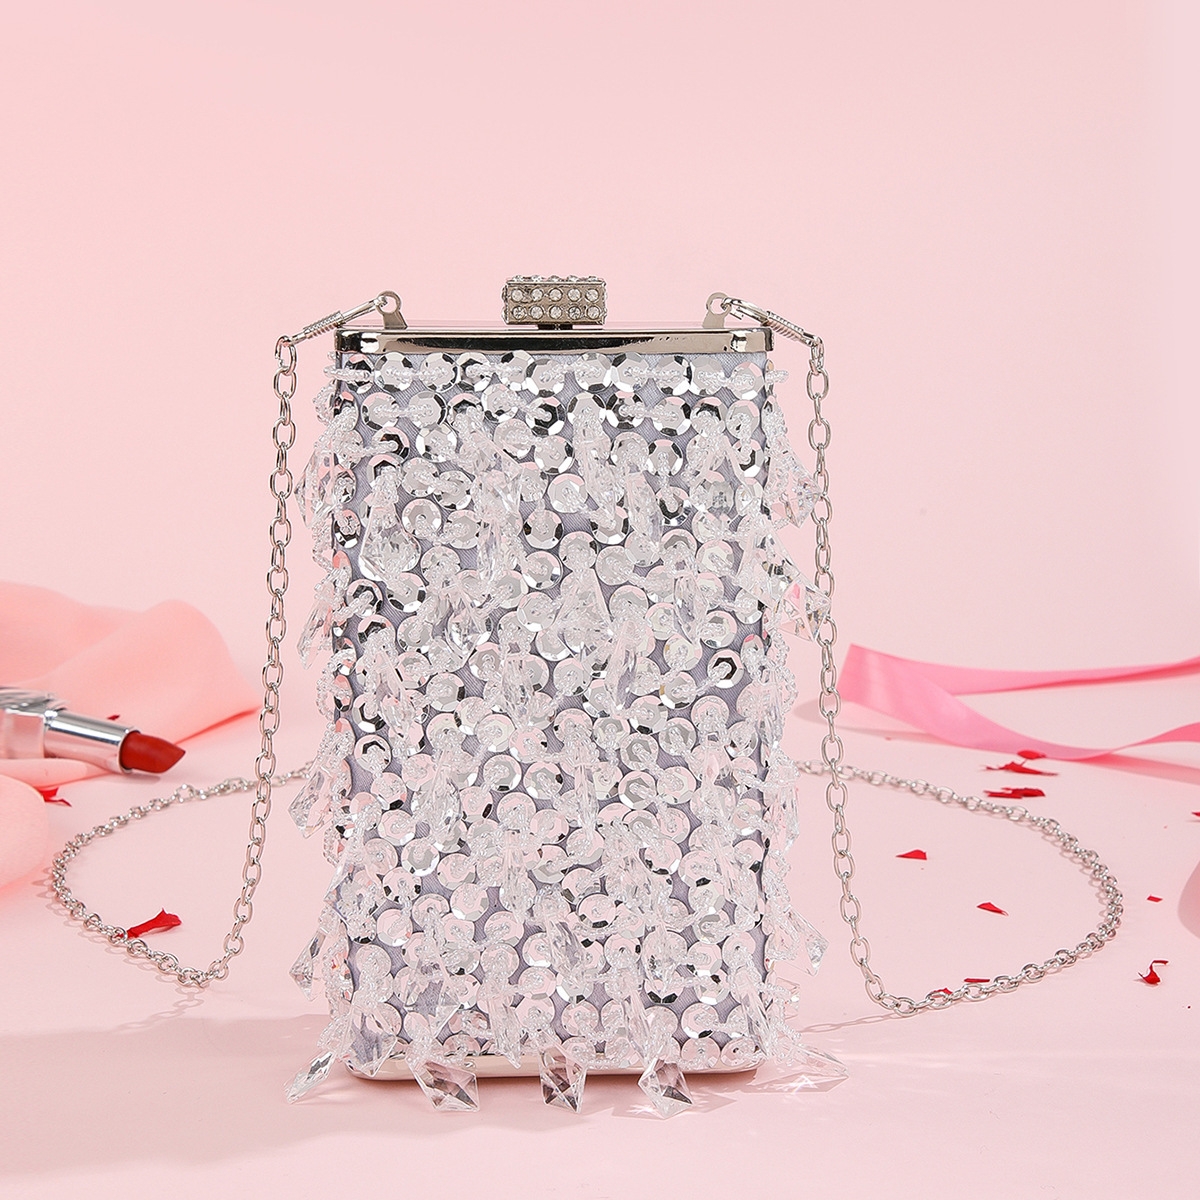 Swarovski Crystal Bag | Fancy purses, Fancy handbags, Crystal bags